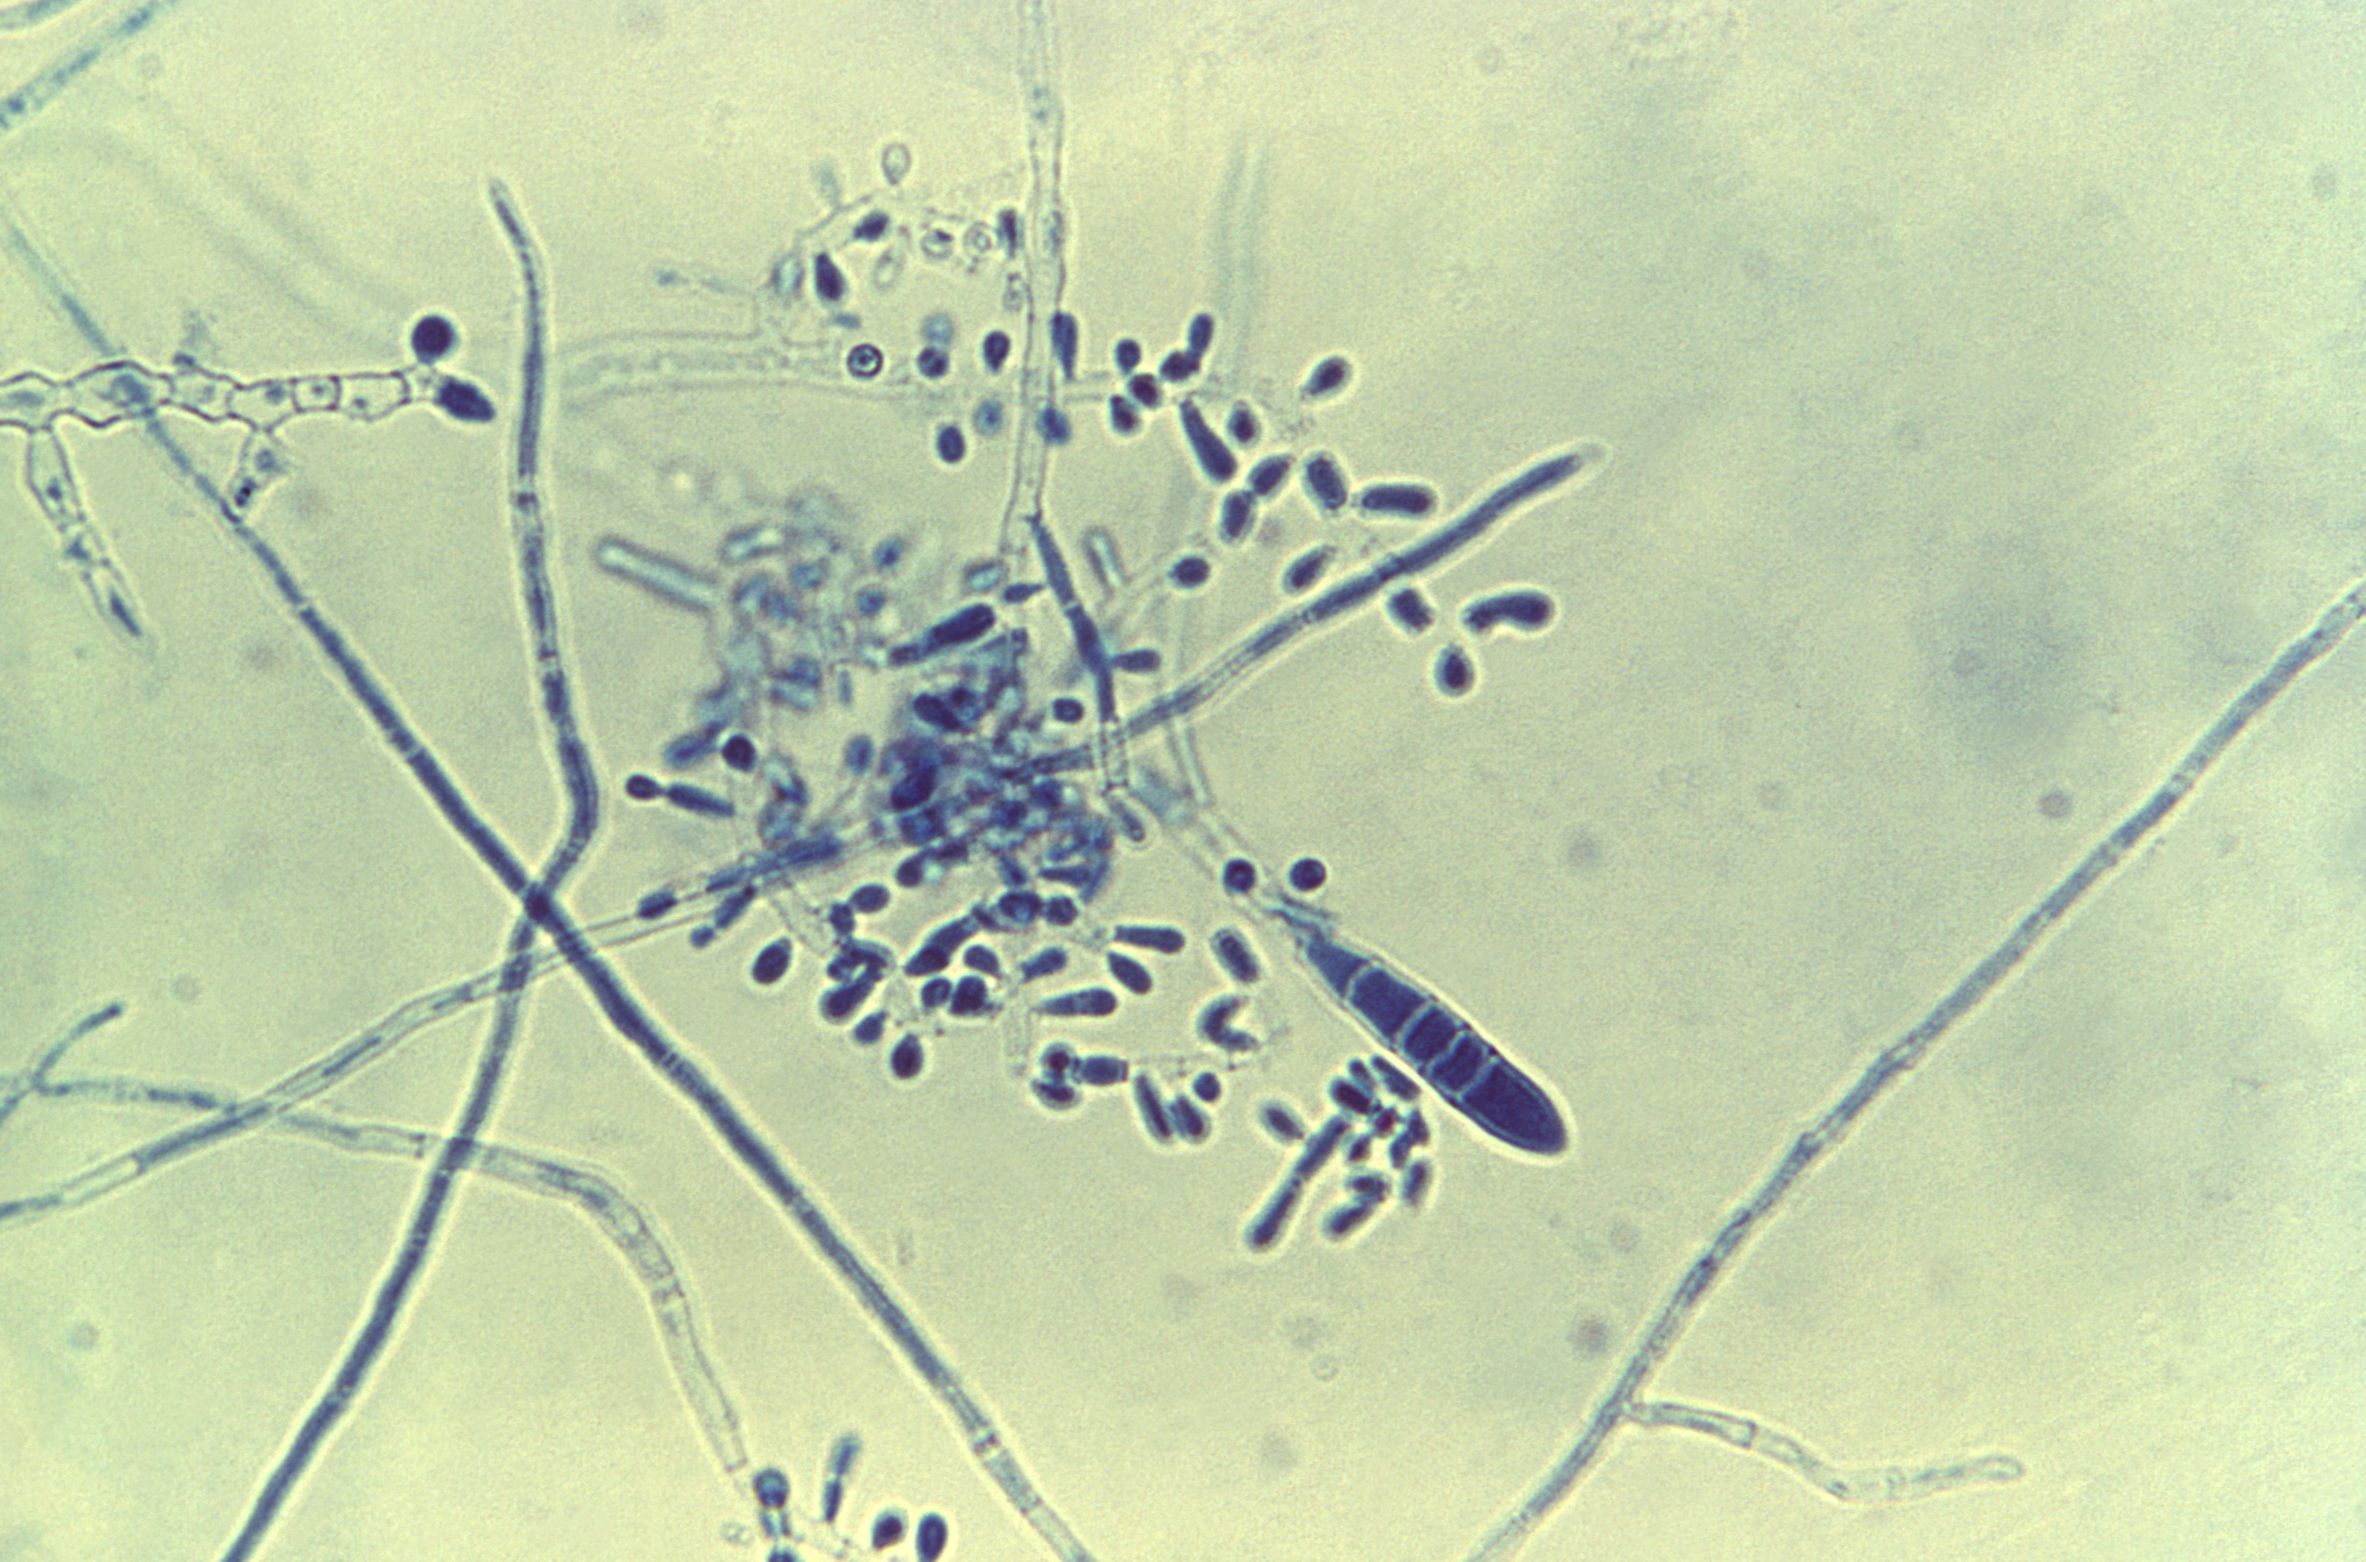 ringworm microscope